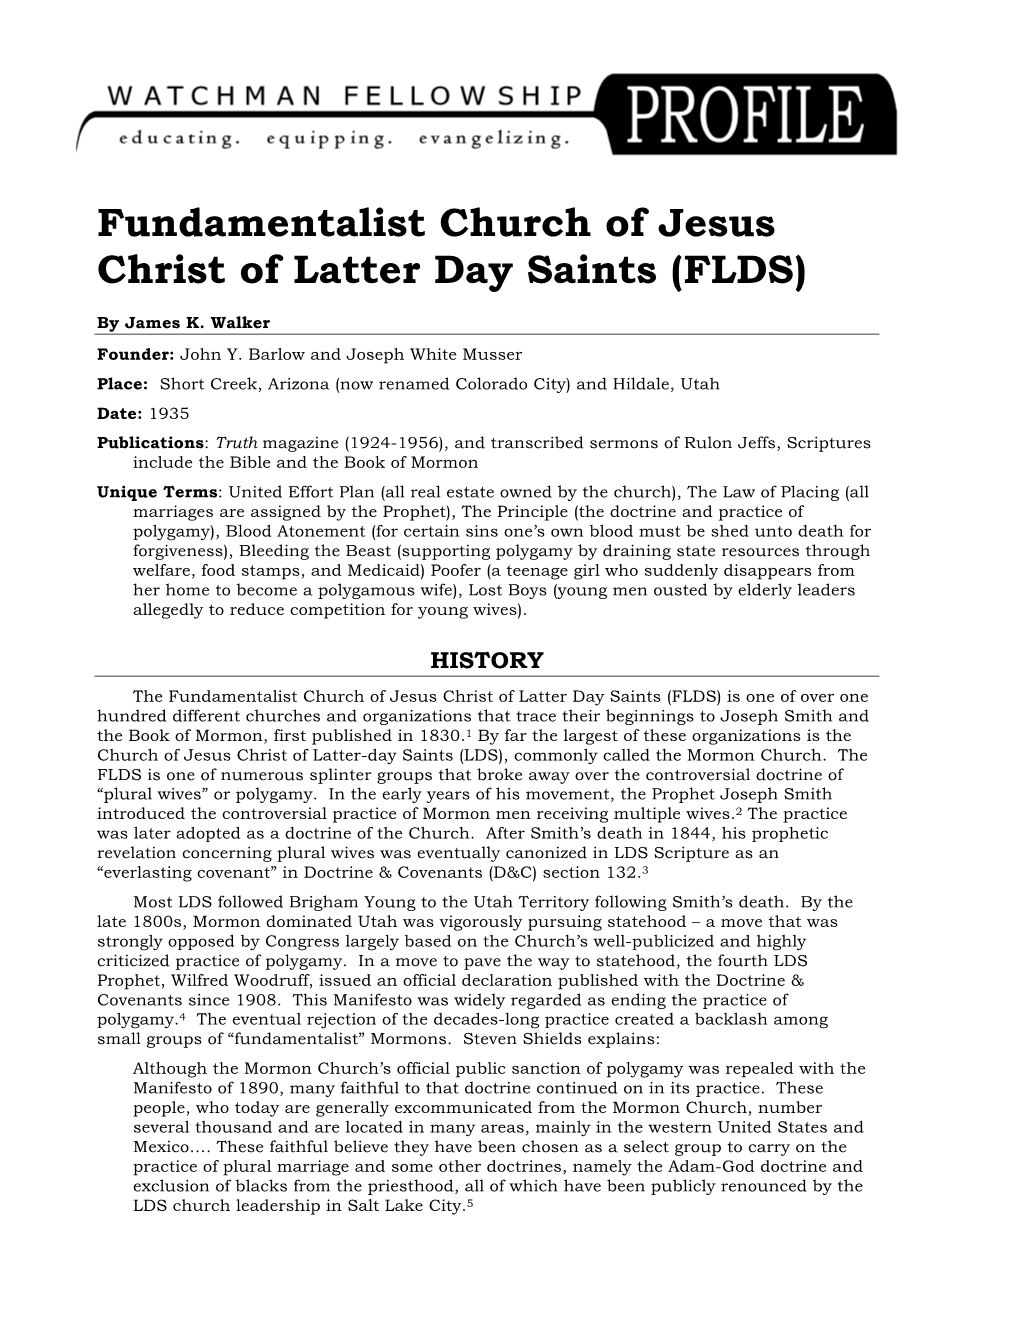 Fundamentalist Church of Jesus Christ of Latter Day Saints Profile